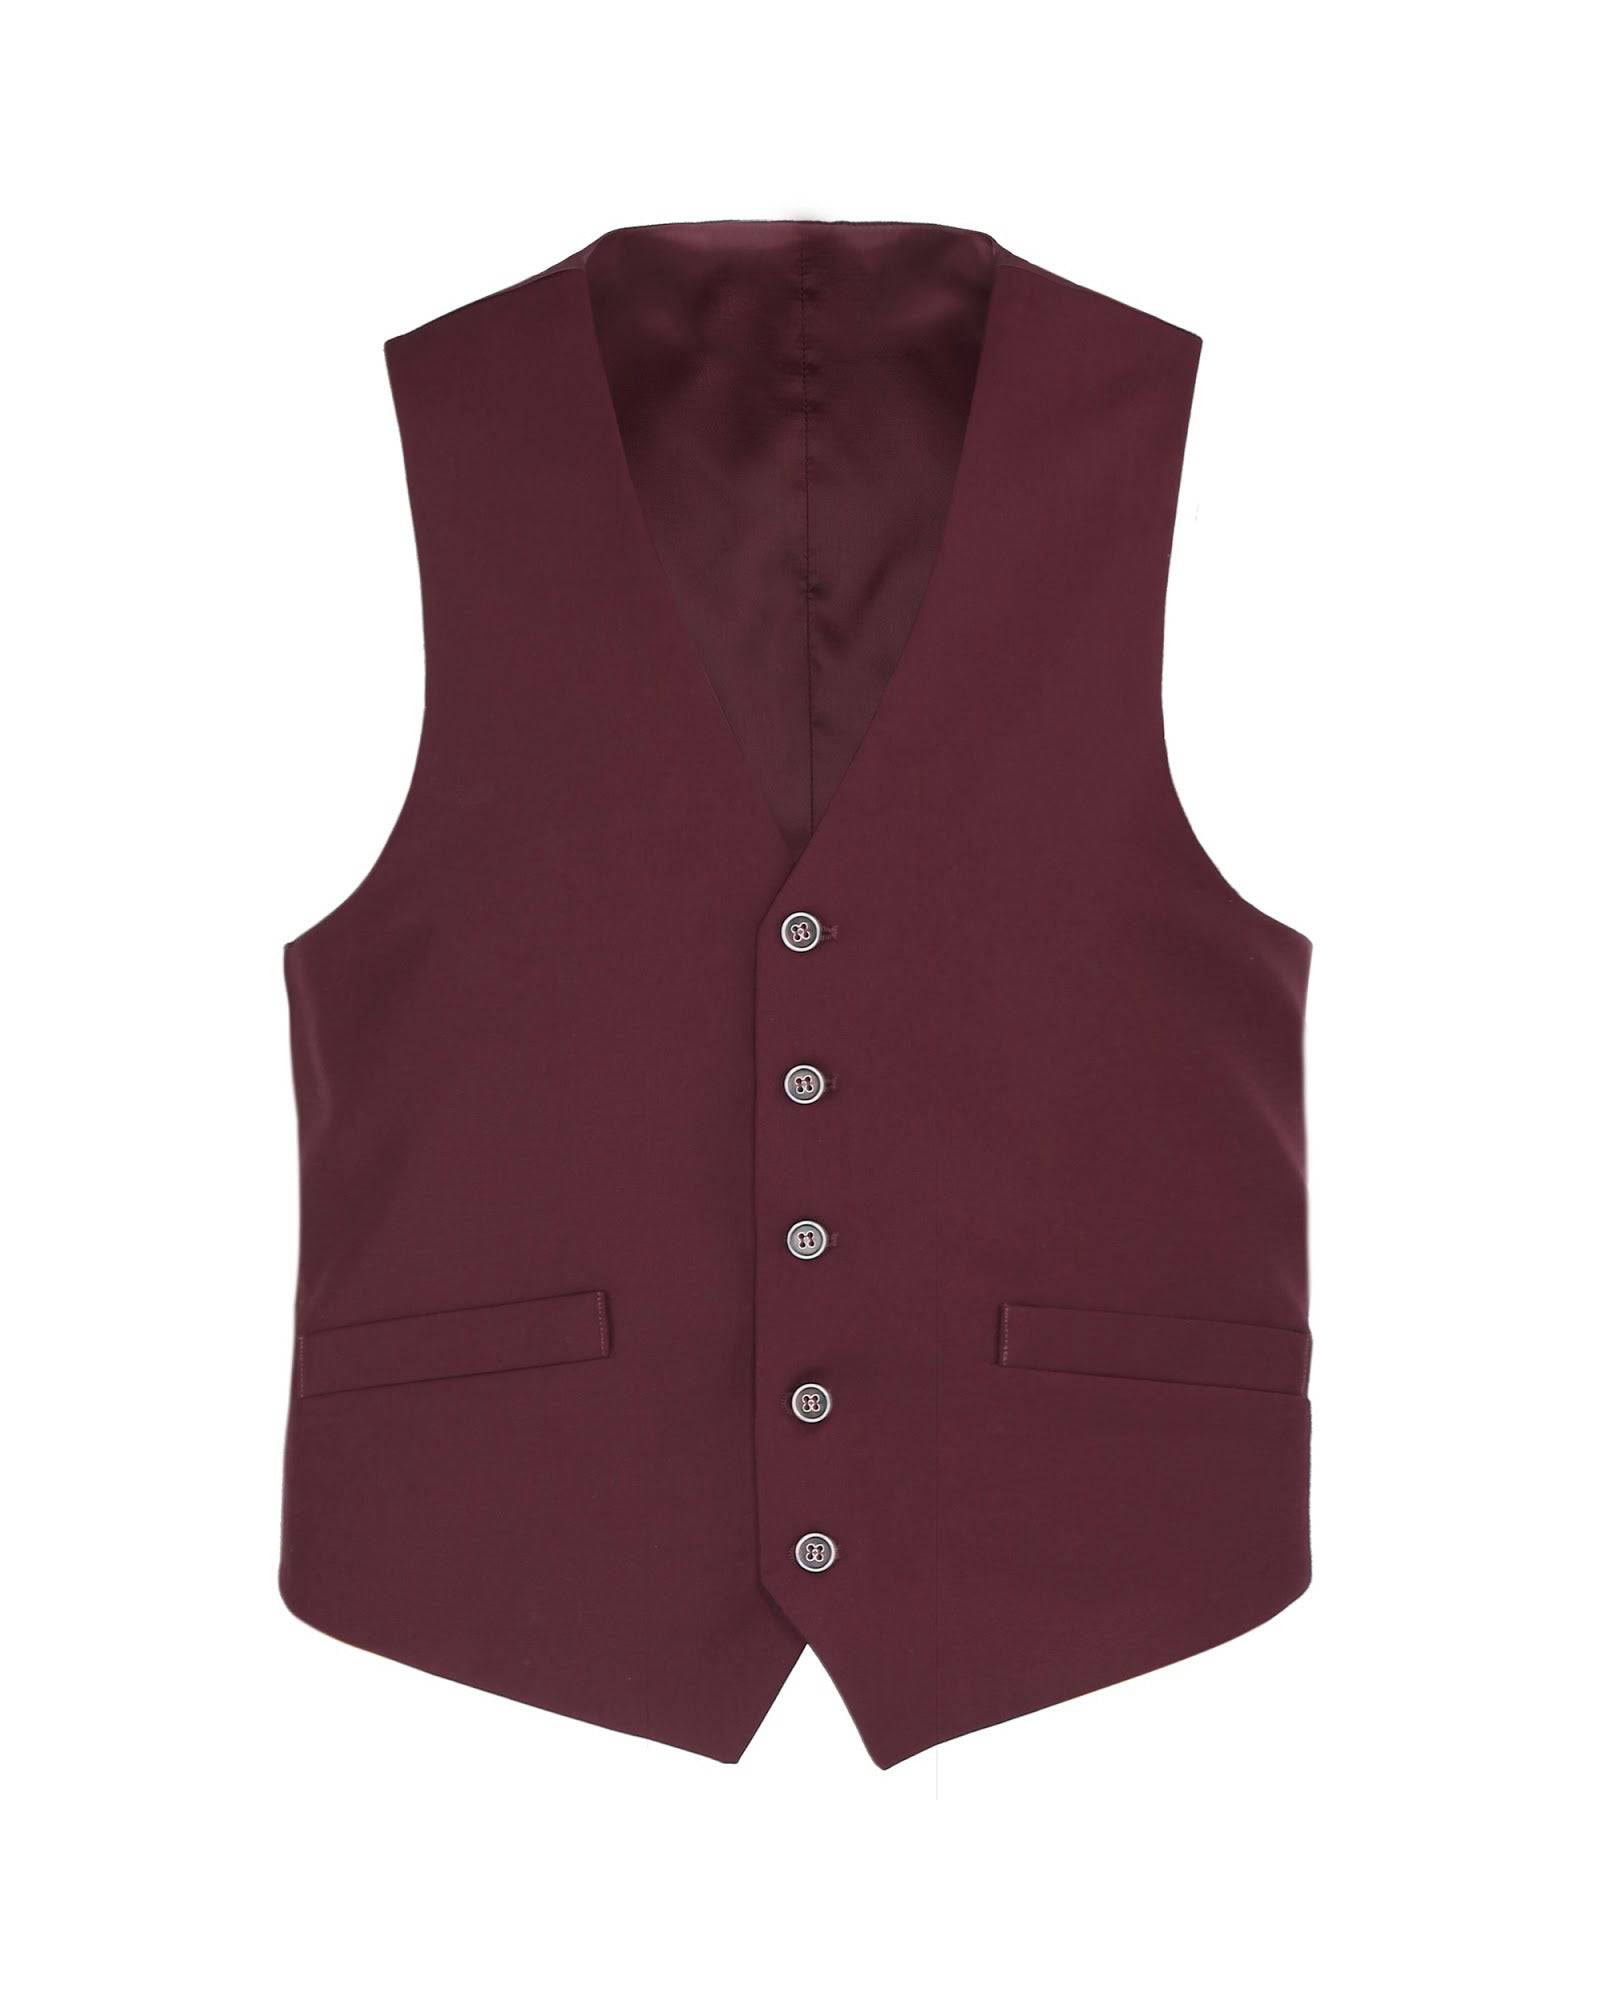 Suit Vest Burgundy - Rainwater's Men's Clothing and Tuxedo Rental